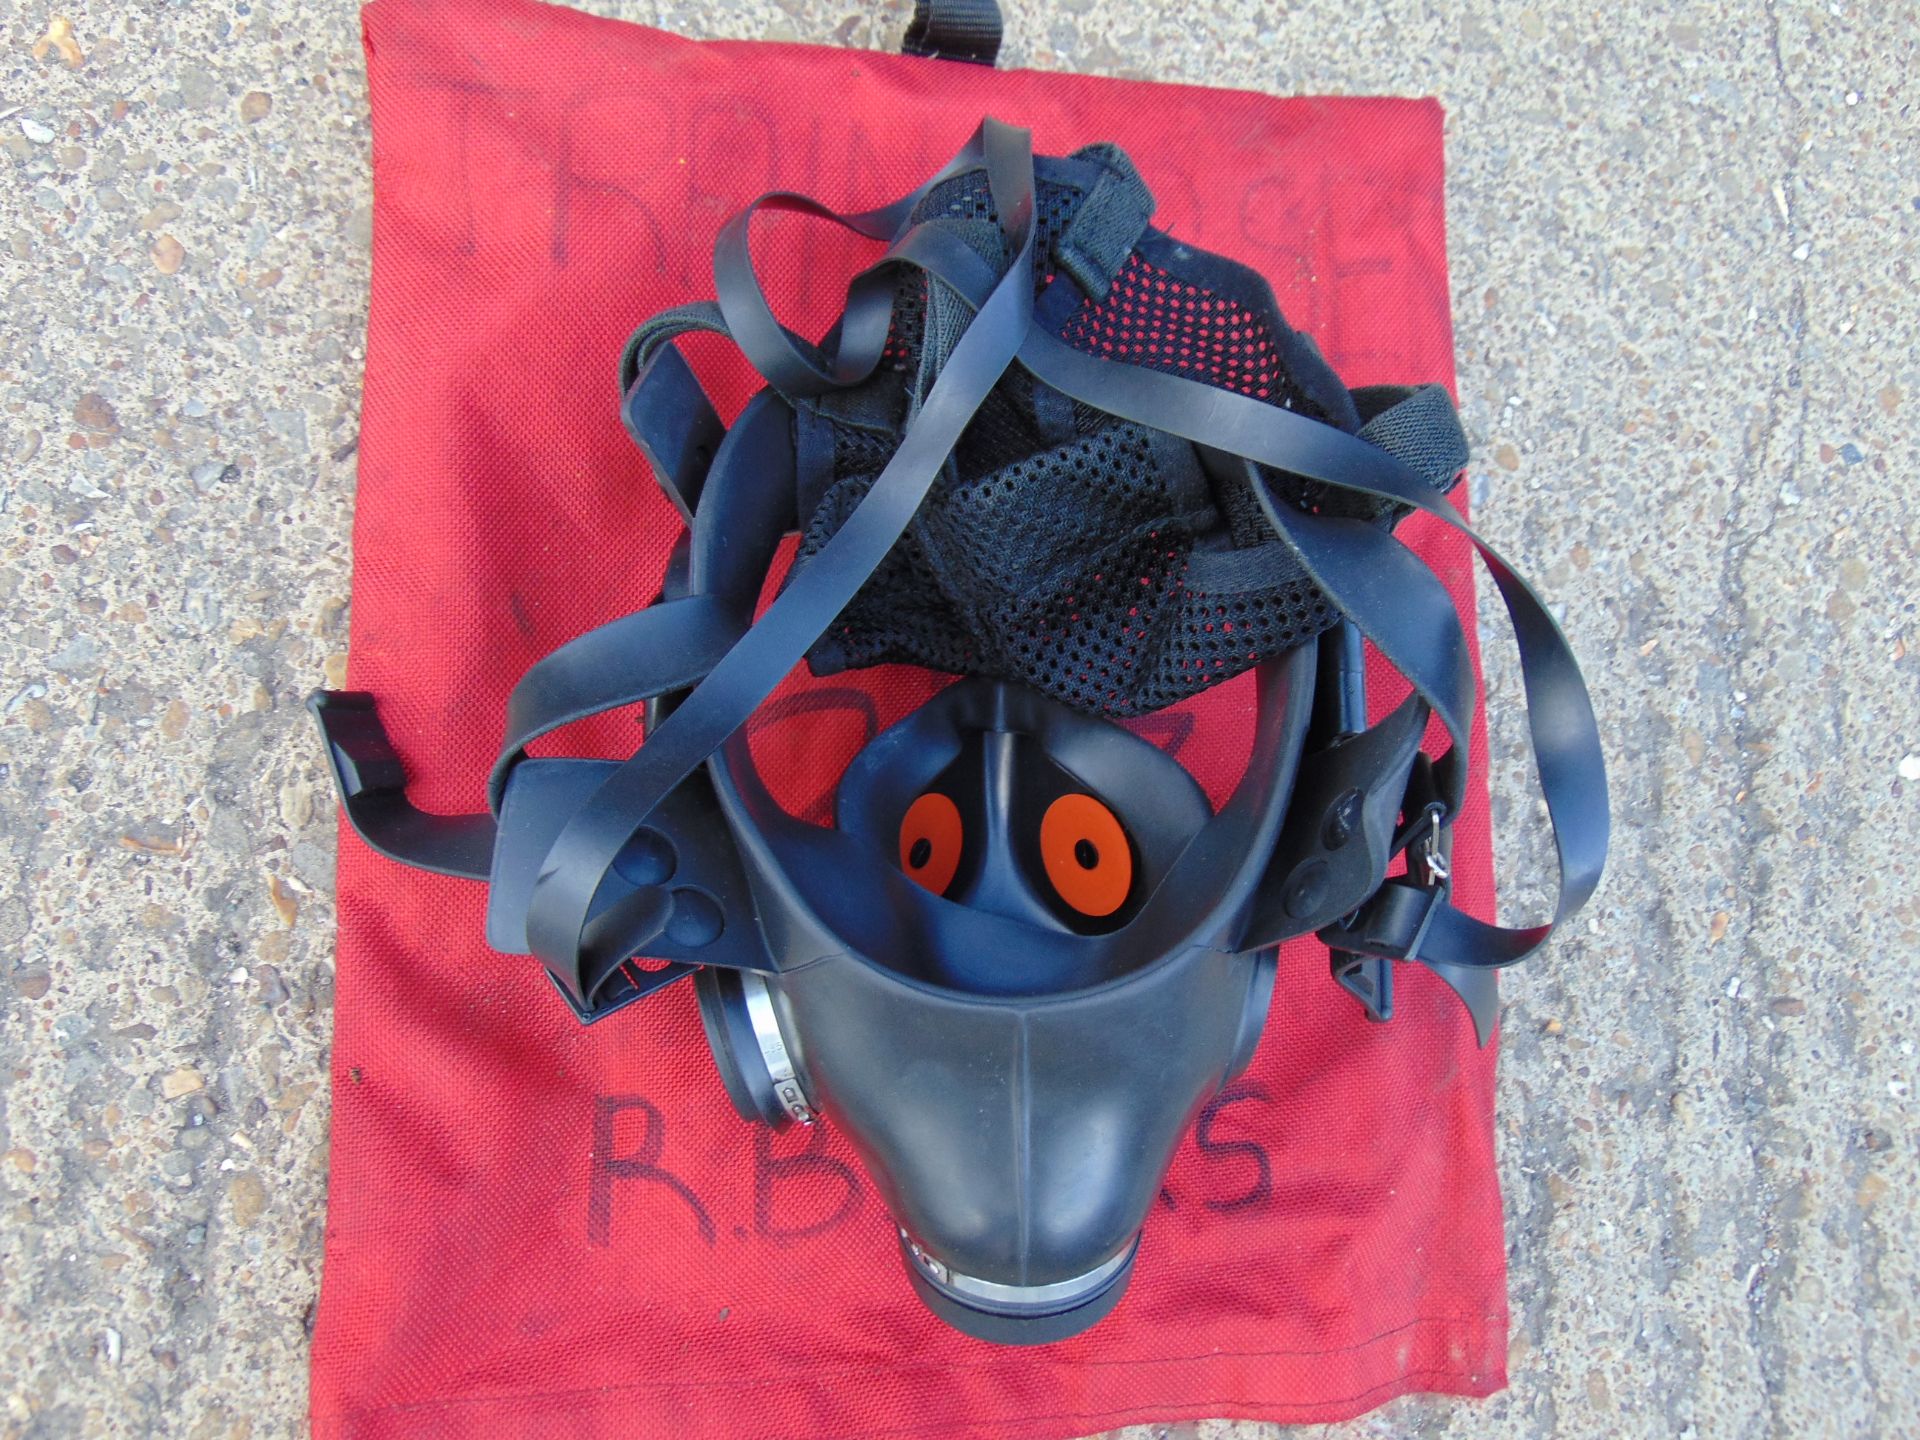 Sabre SCBA Mask - Image 3 of 3